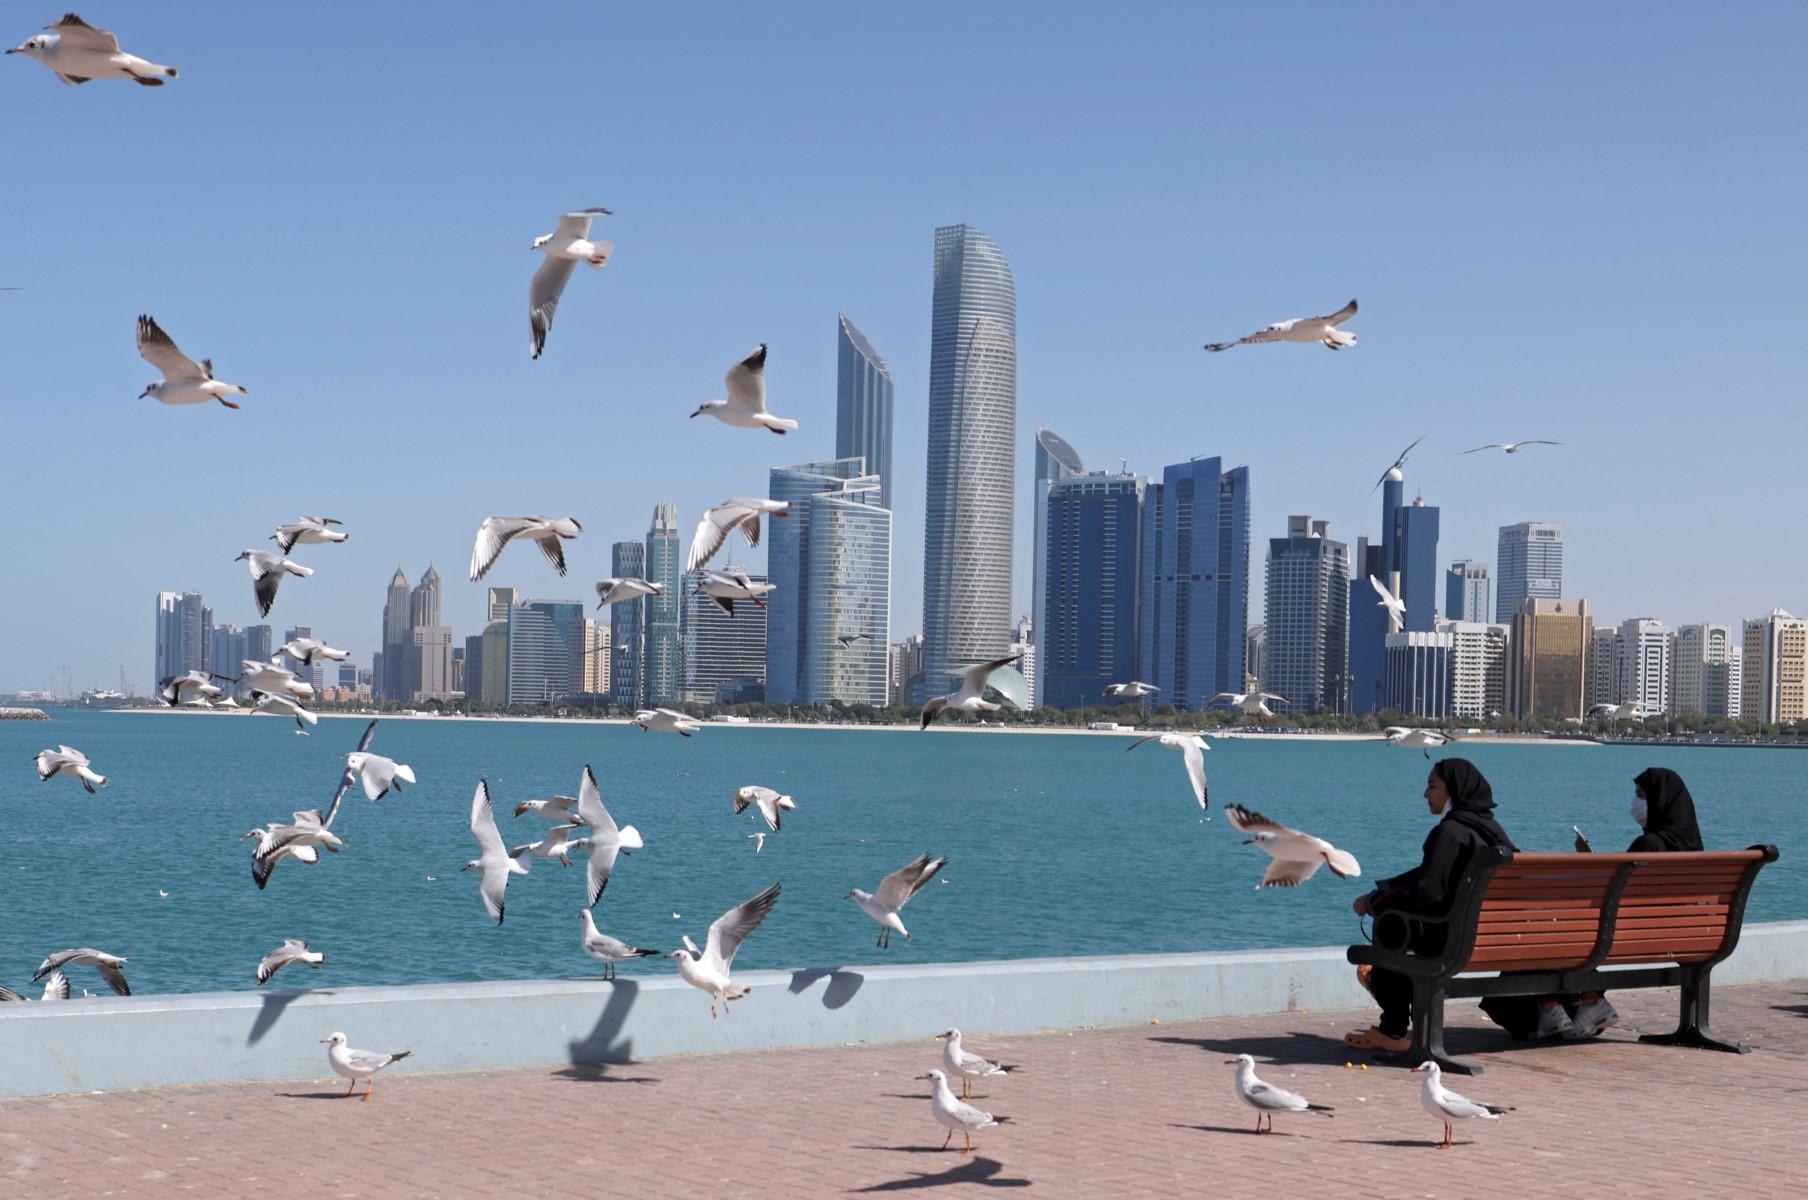 This file photo taken on Jan 24 shows seagulls flying across Abu Dhabi's seaside promenade in the Emirati capital. Photo: AFP